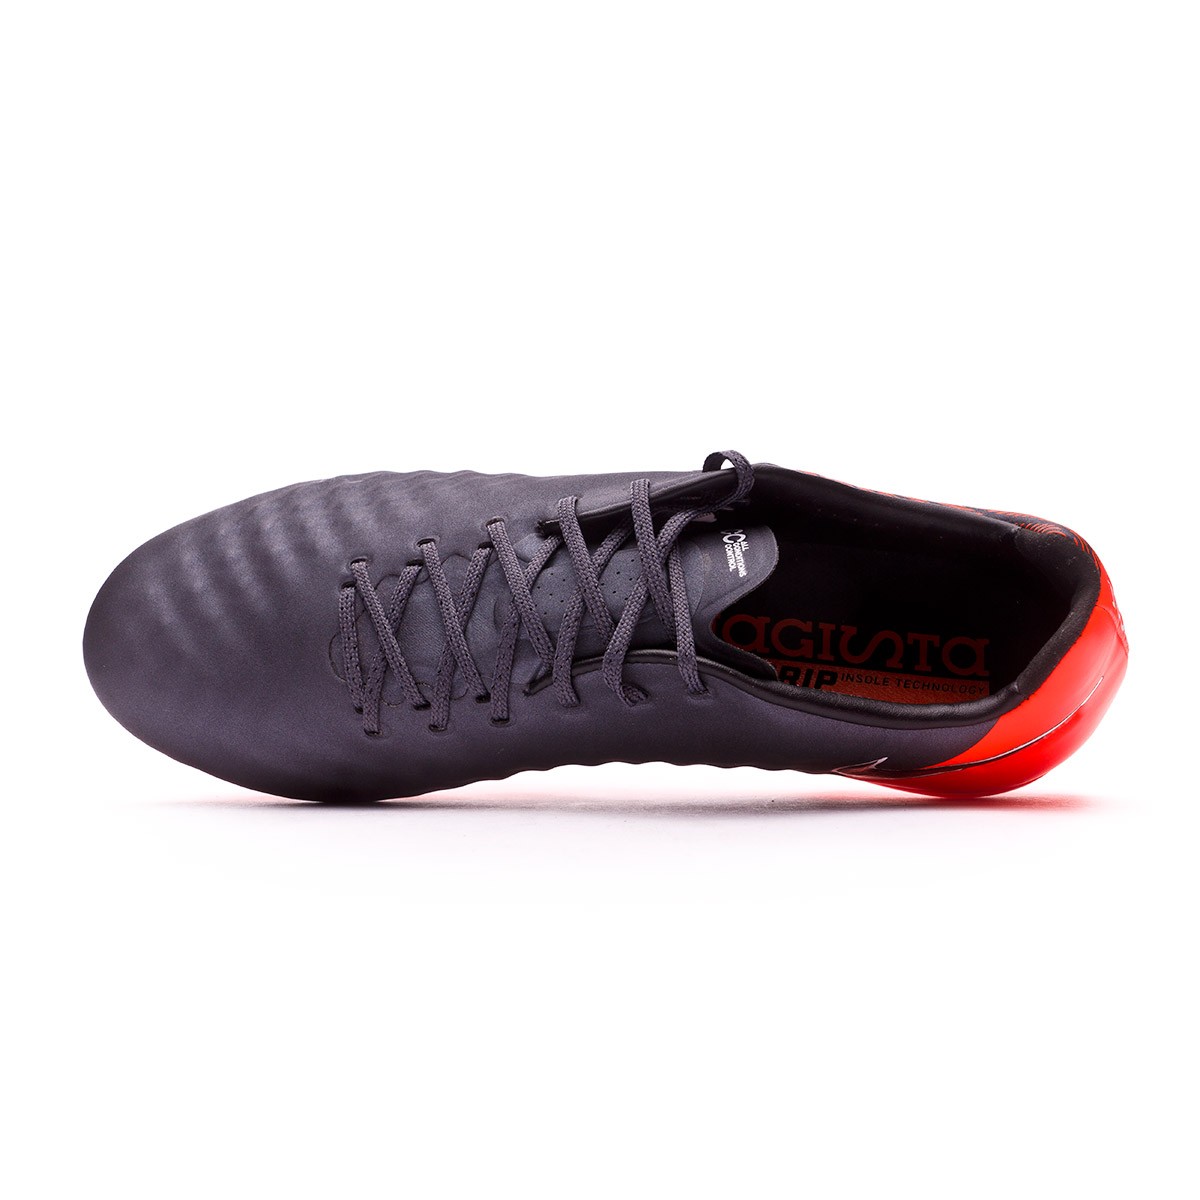 Nike MagistaX Proximo II IC ACC Indoor Soccer Cleats Boots